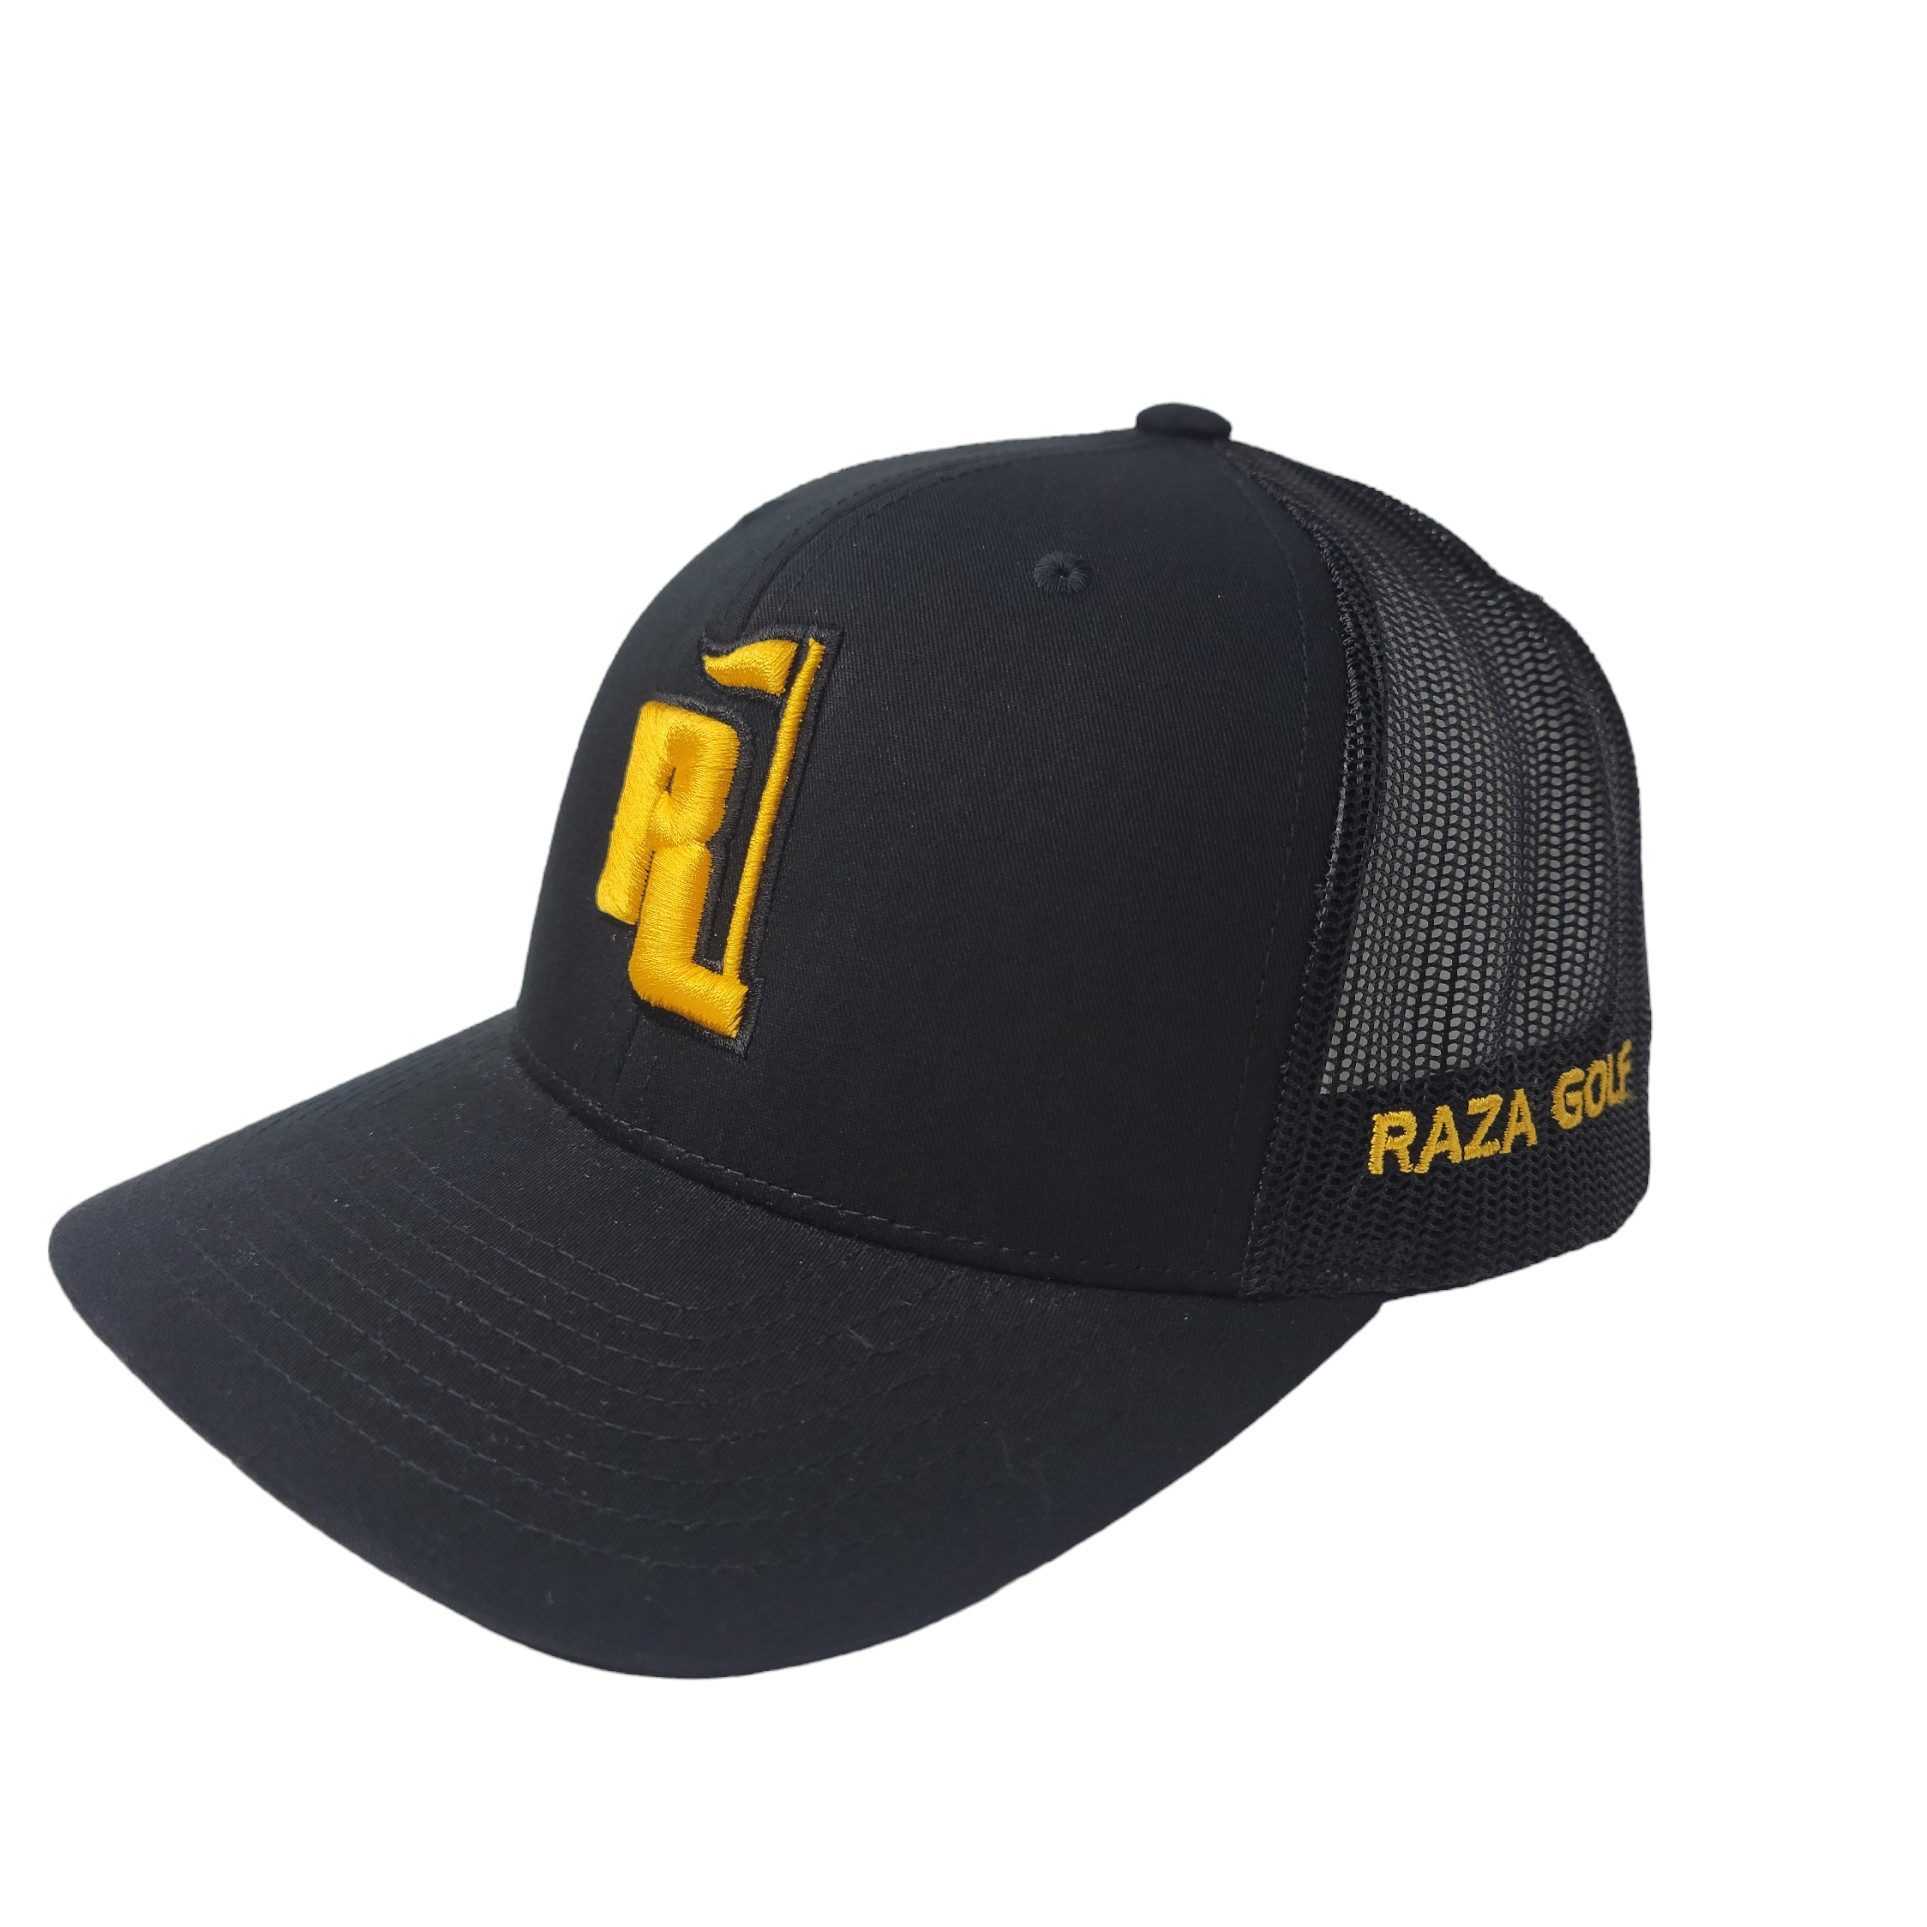 Raza Golf Black Trucker with Yellow and Black Logo